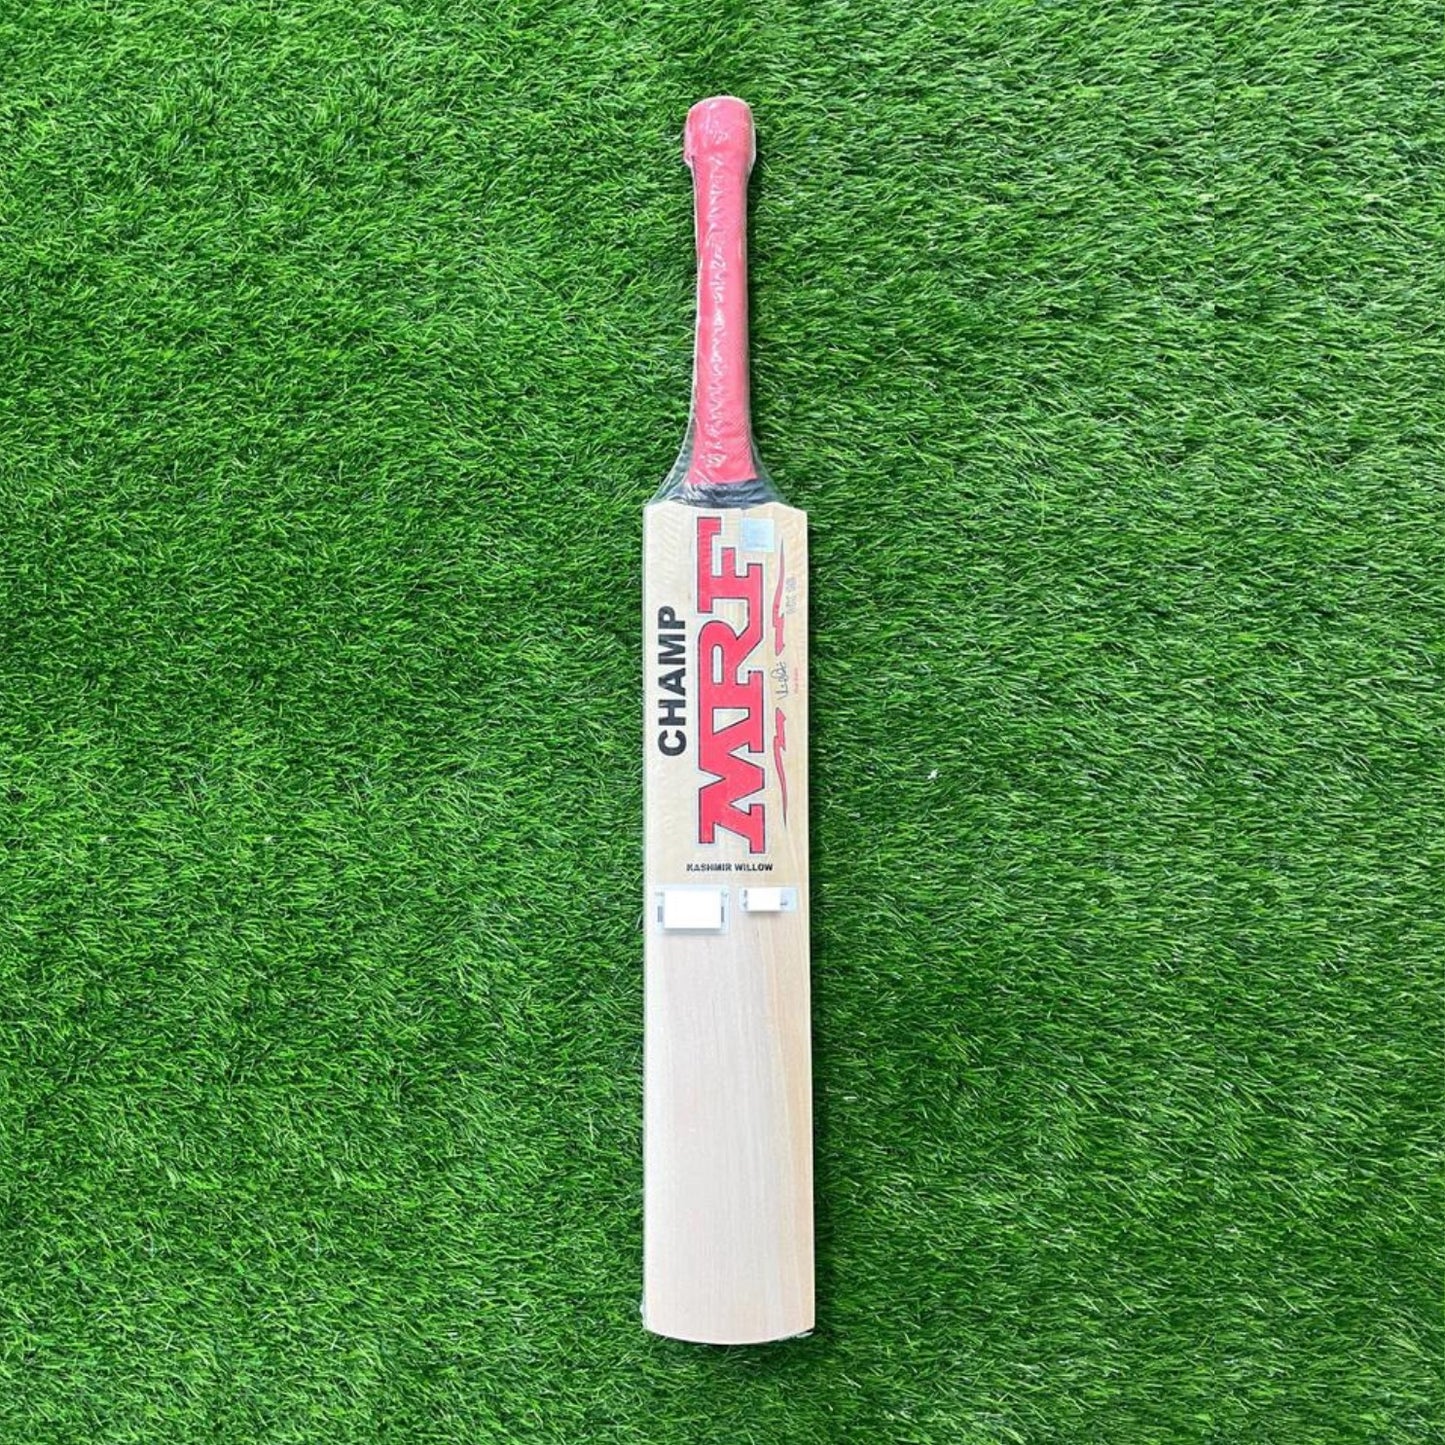 MRF KW CHAMP Kashmir Willow Cricket Bat - Junior Size Harrow